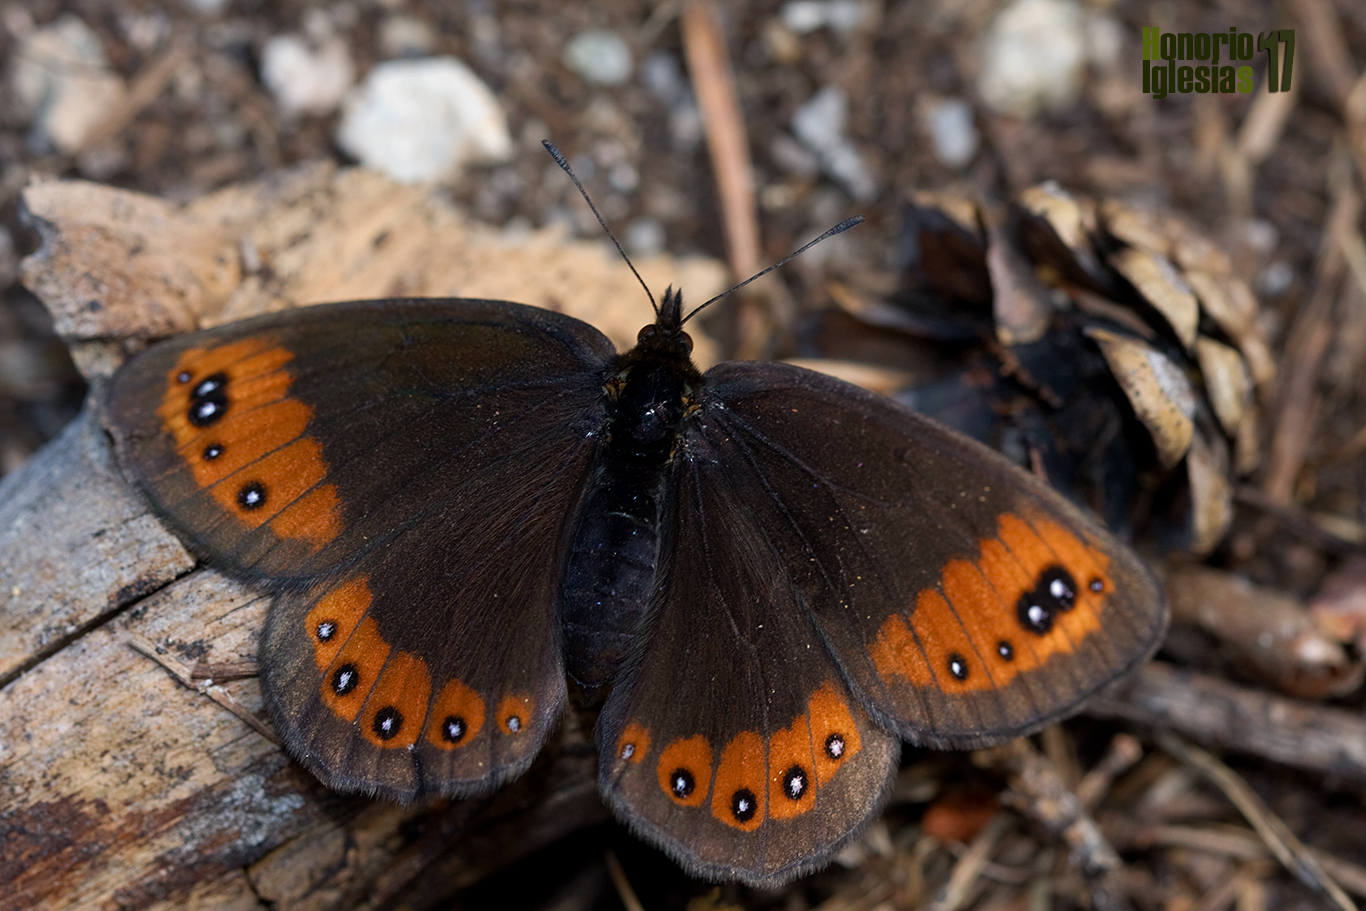 Hembra de mariposa erebia común o montañesa de banda larga (Erebia meolans) mostrando su anverso alar.